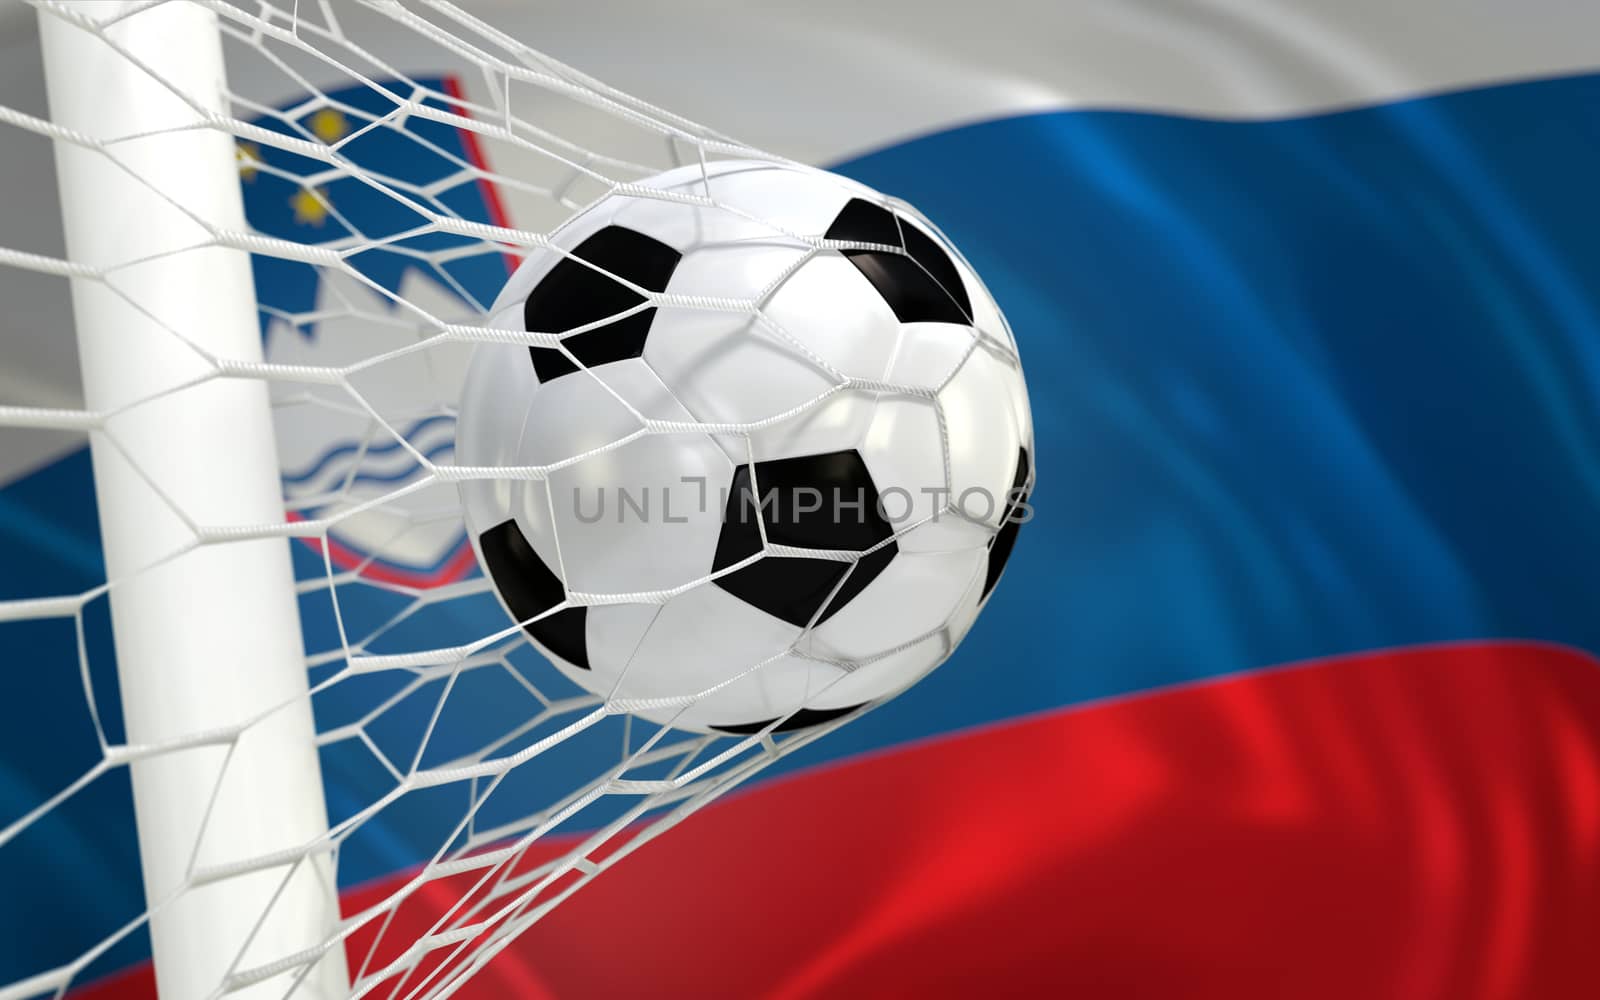 Slovenia flag and soccer ball, football in goal net